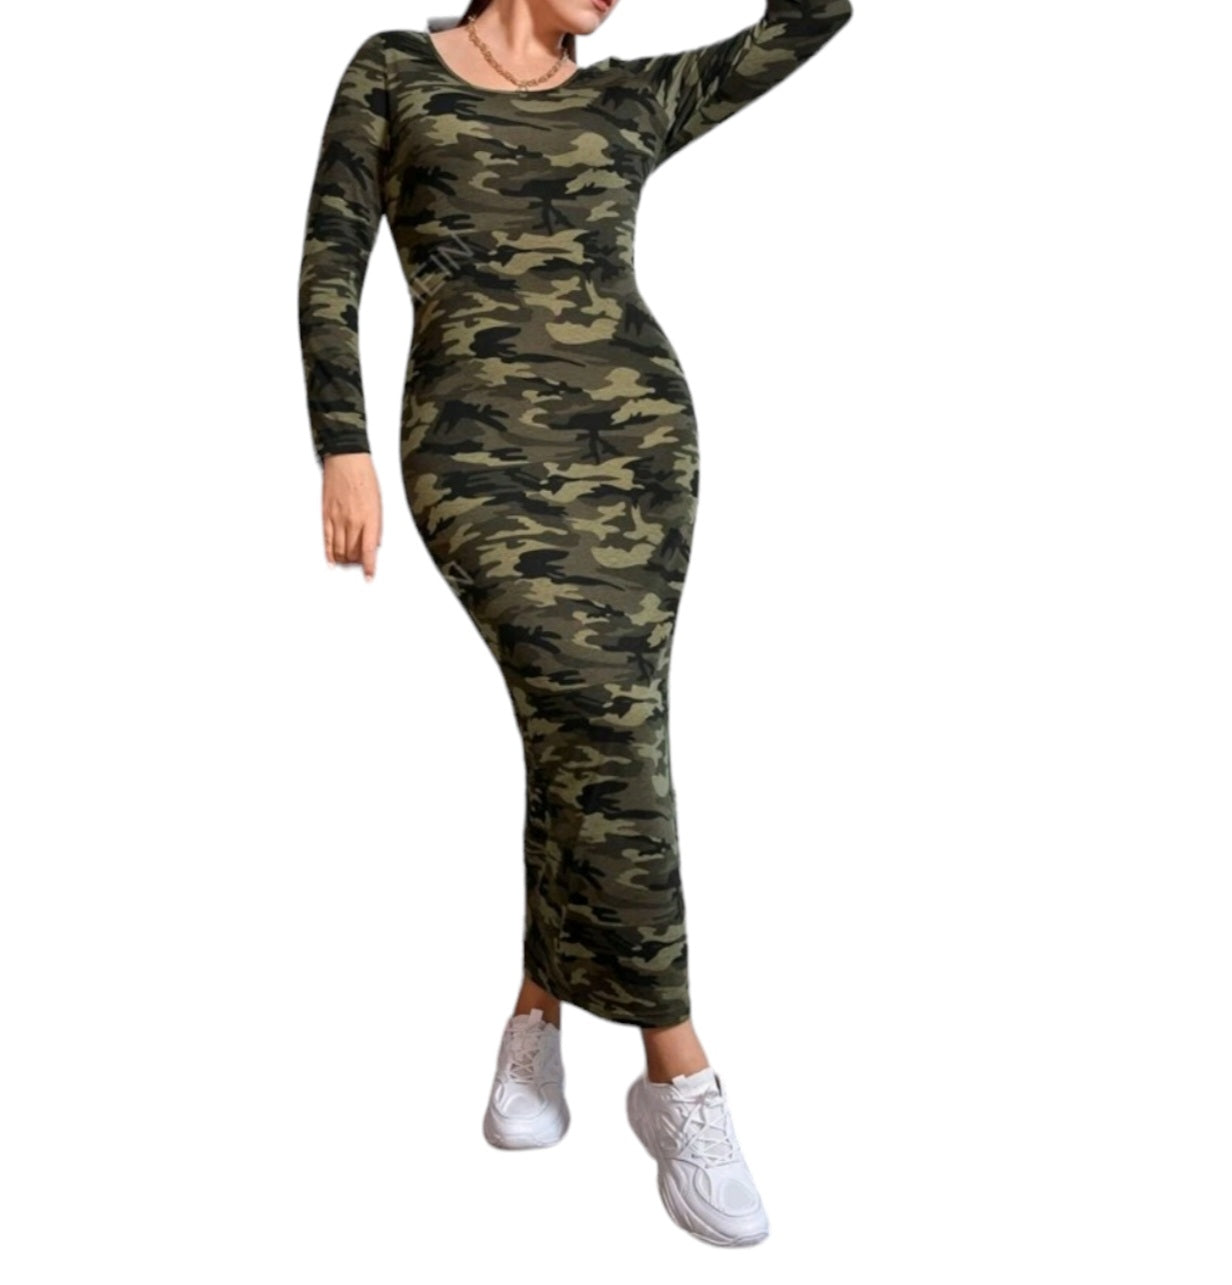 Plus-size-Kleid Maxikleid Camouflage Jersey 44-52